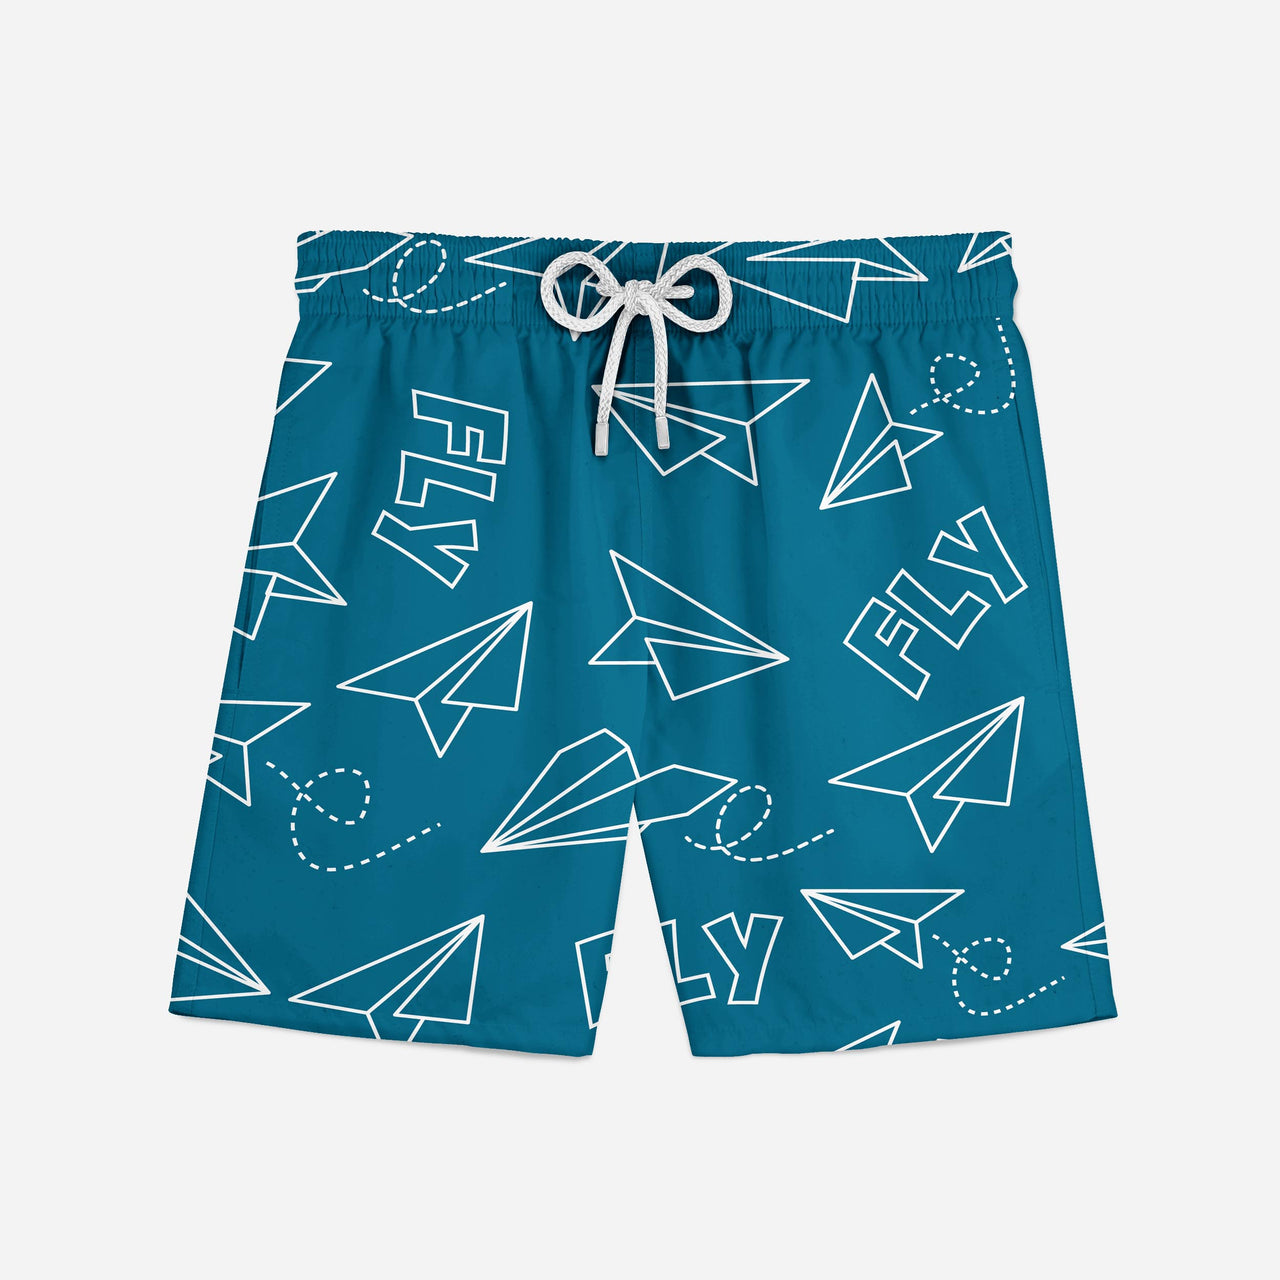 Paper Airplane & Fly Designed Swim Trunks & Shorts